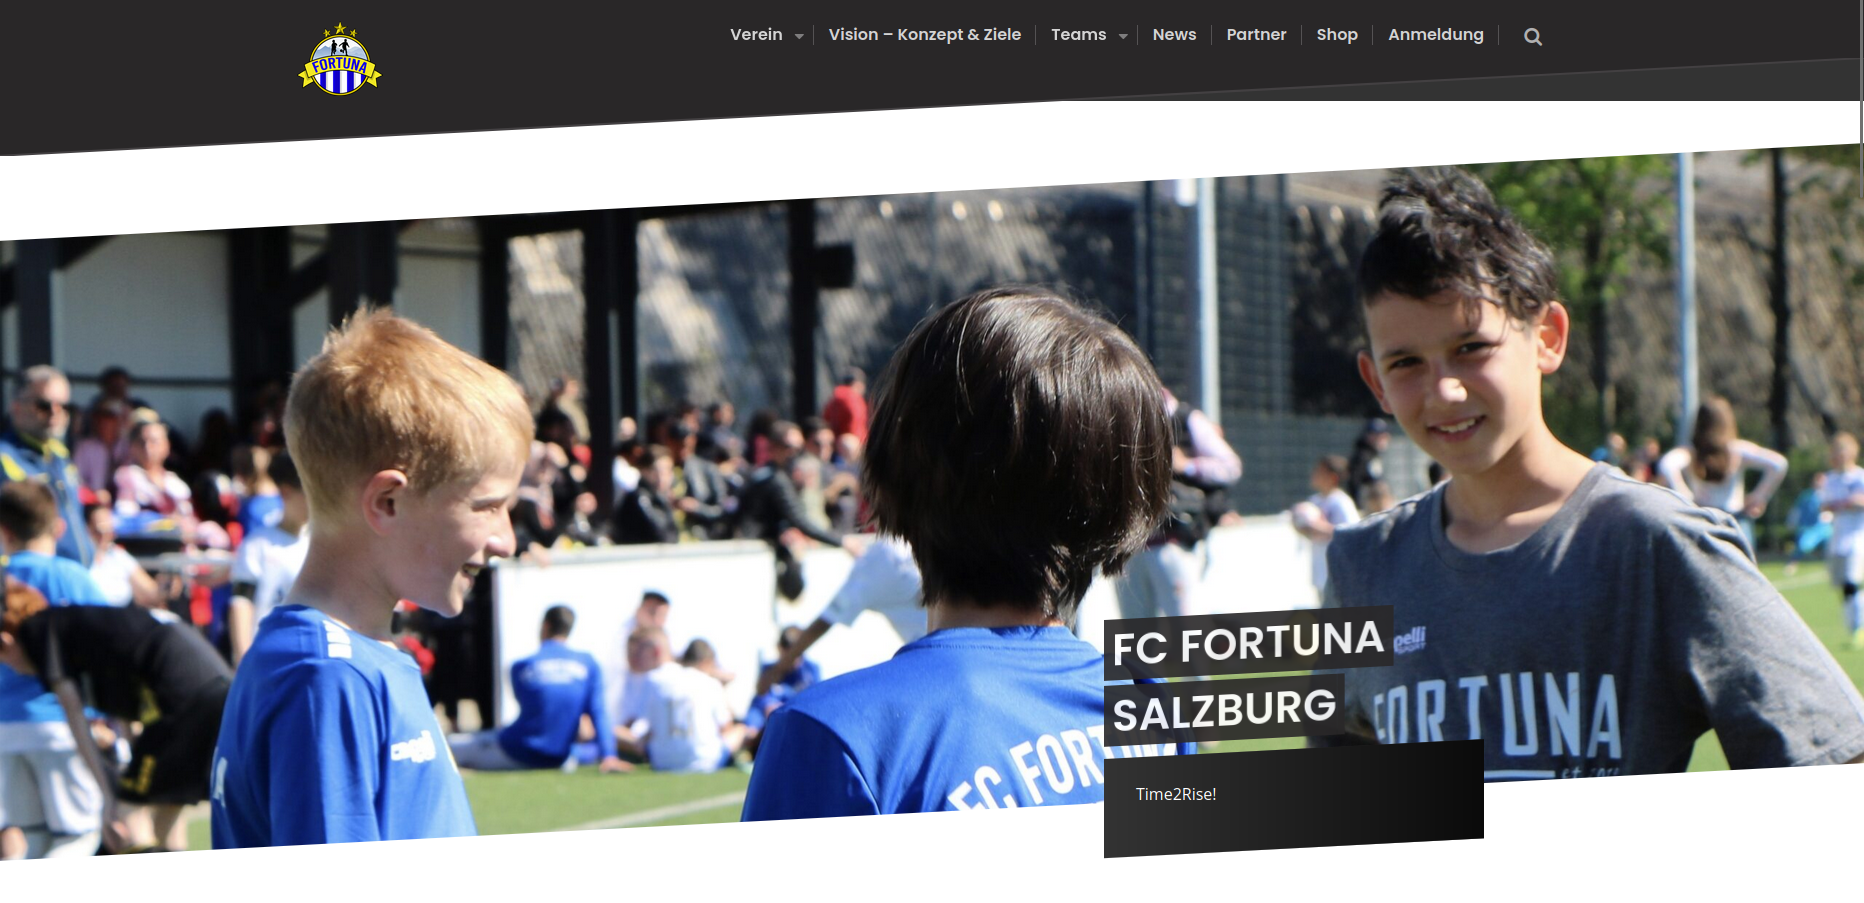 FC Fortuna Salzburg